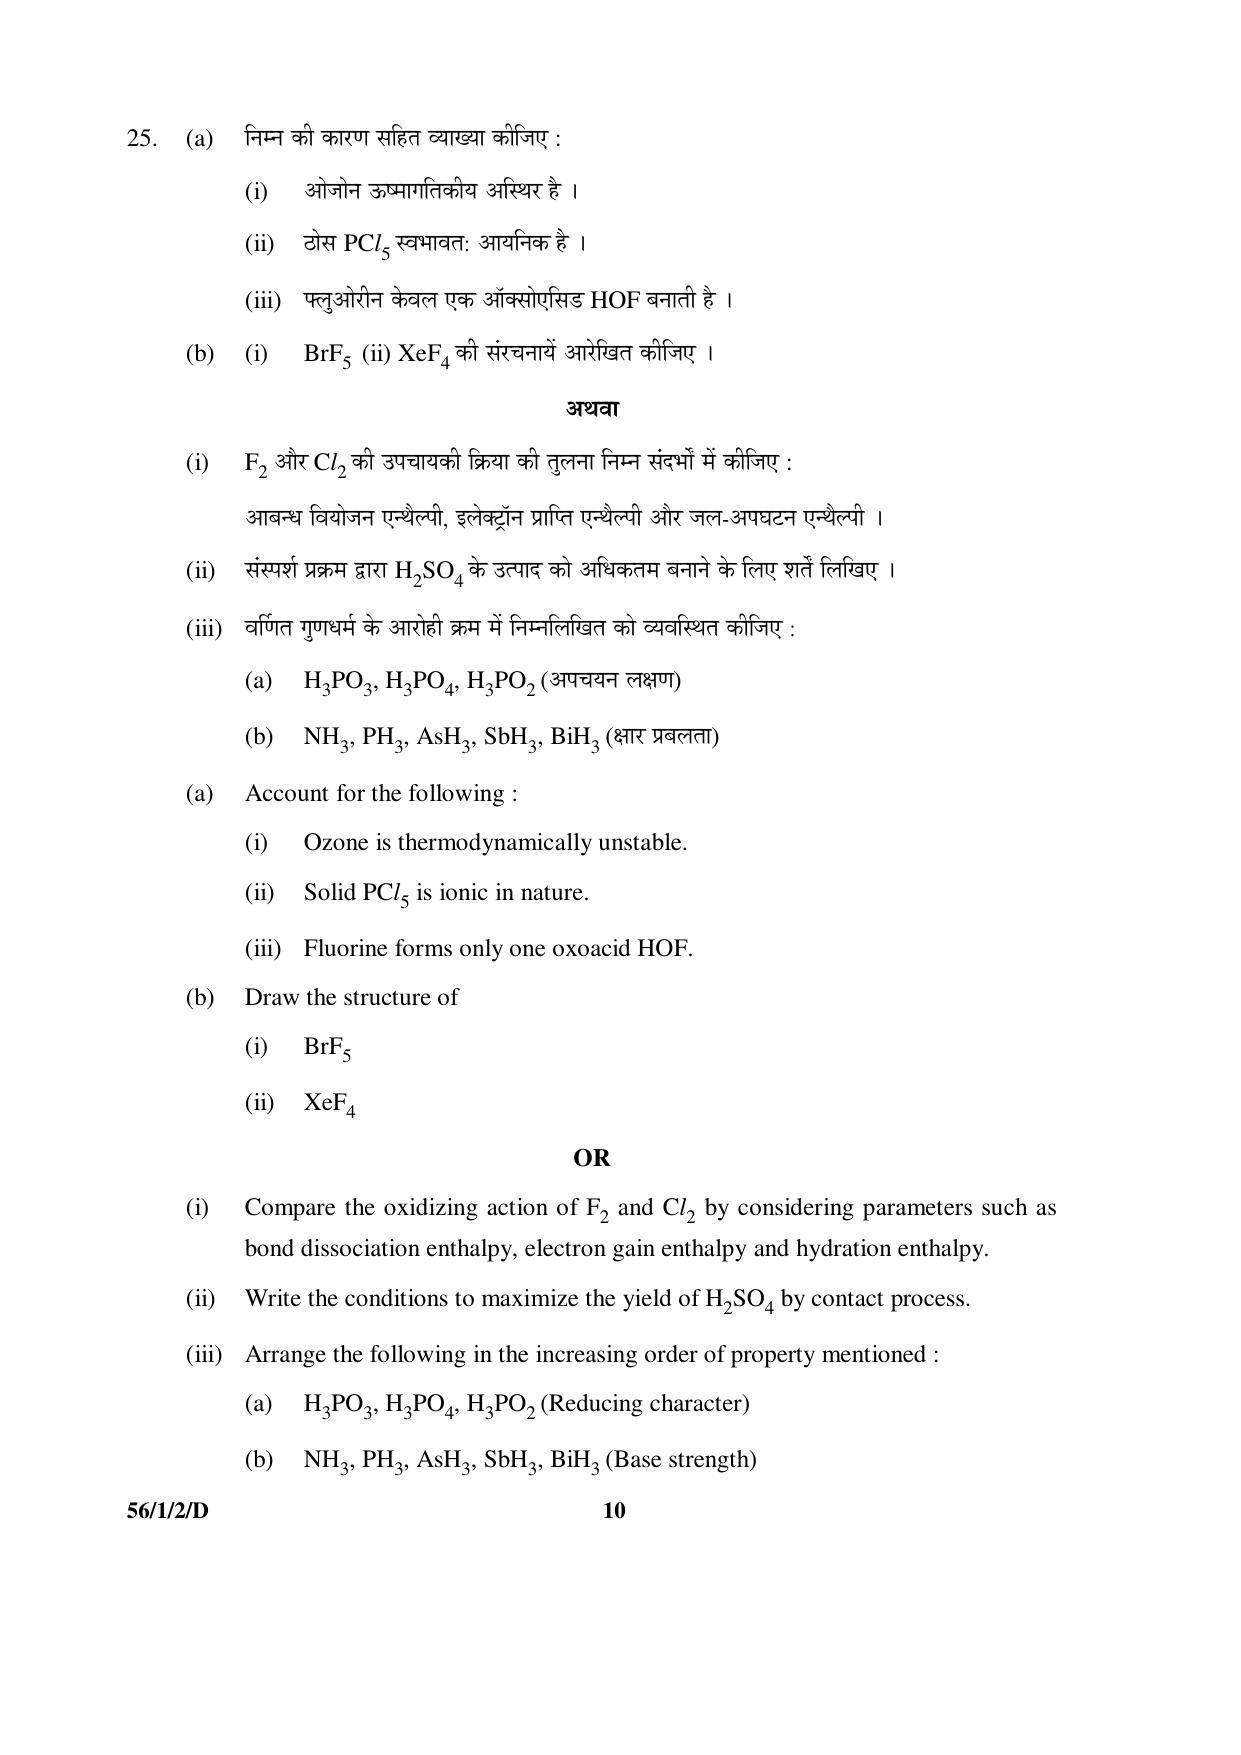 CBSE Class 12 56-1-2-D CHEMISTRY 2016 Question Paper - Page 10